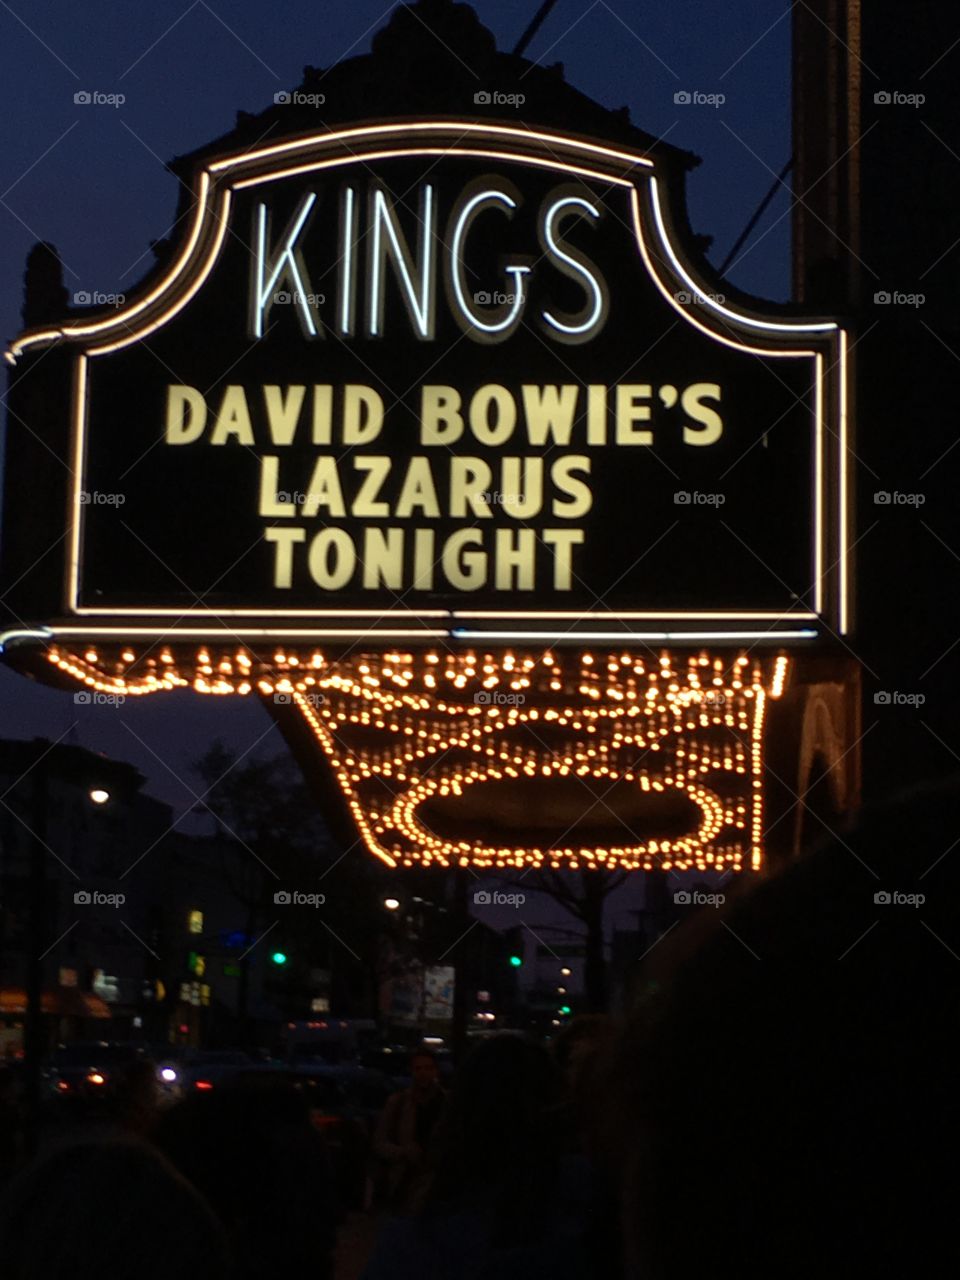 David Bowie’s Lazarus - Kings Theatre - Brooklyn - New York City 